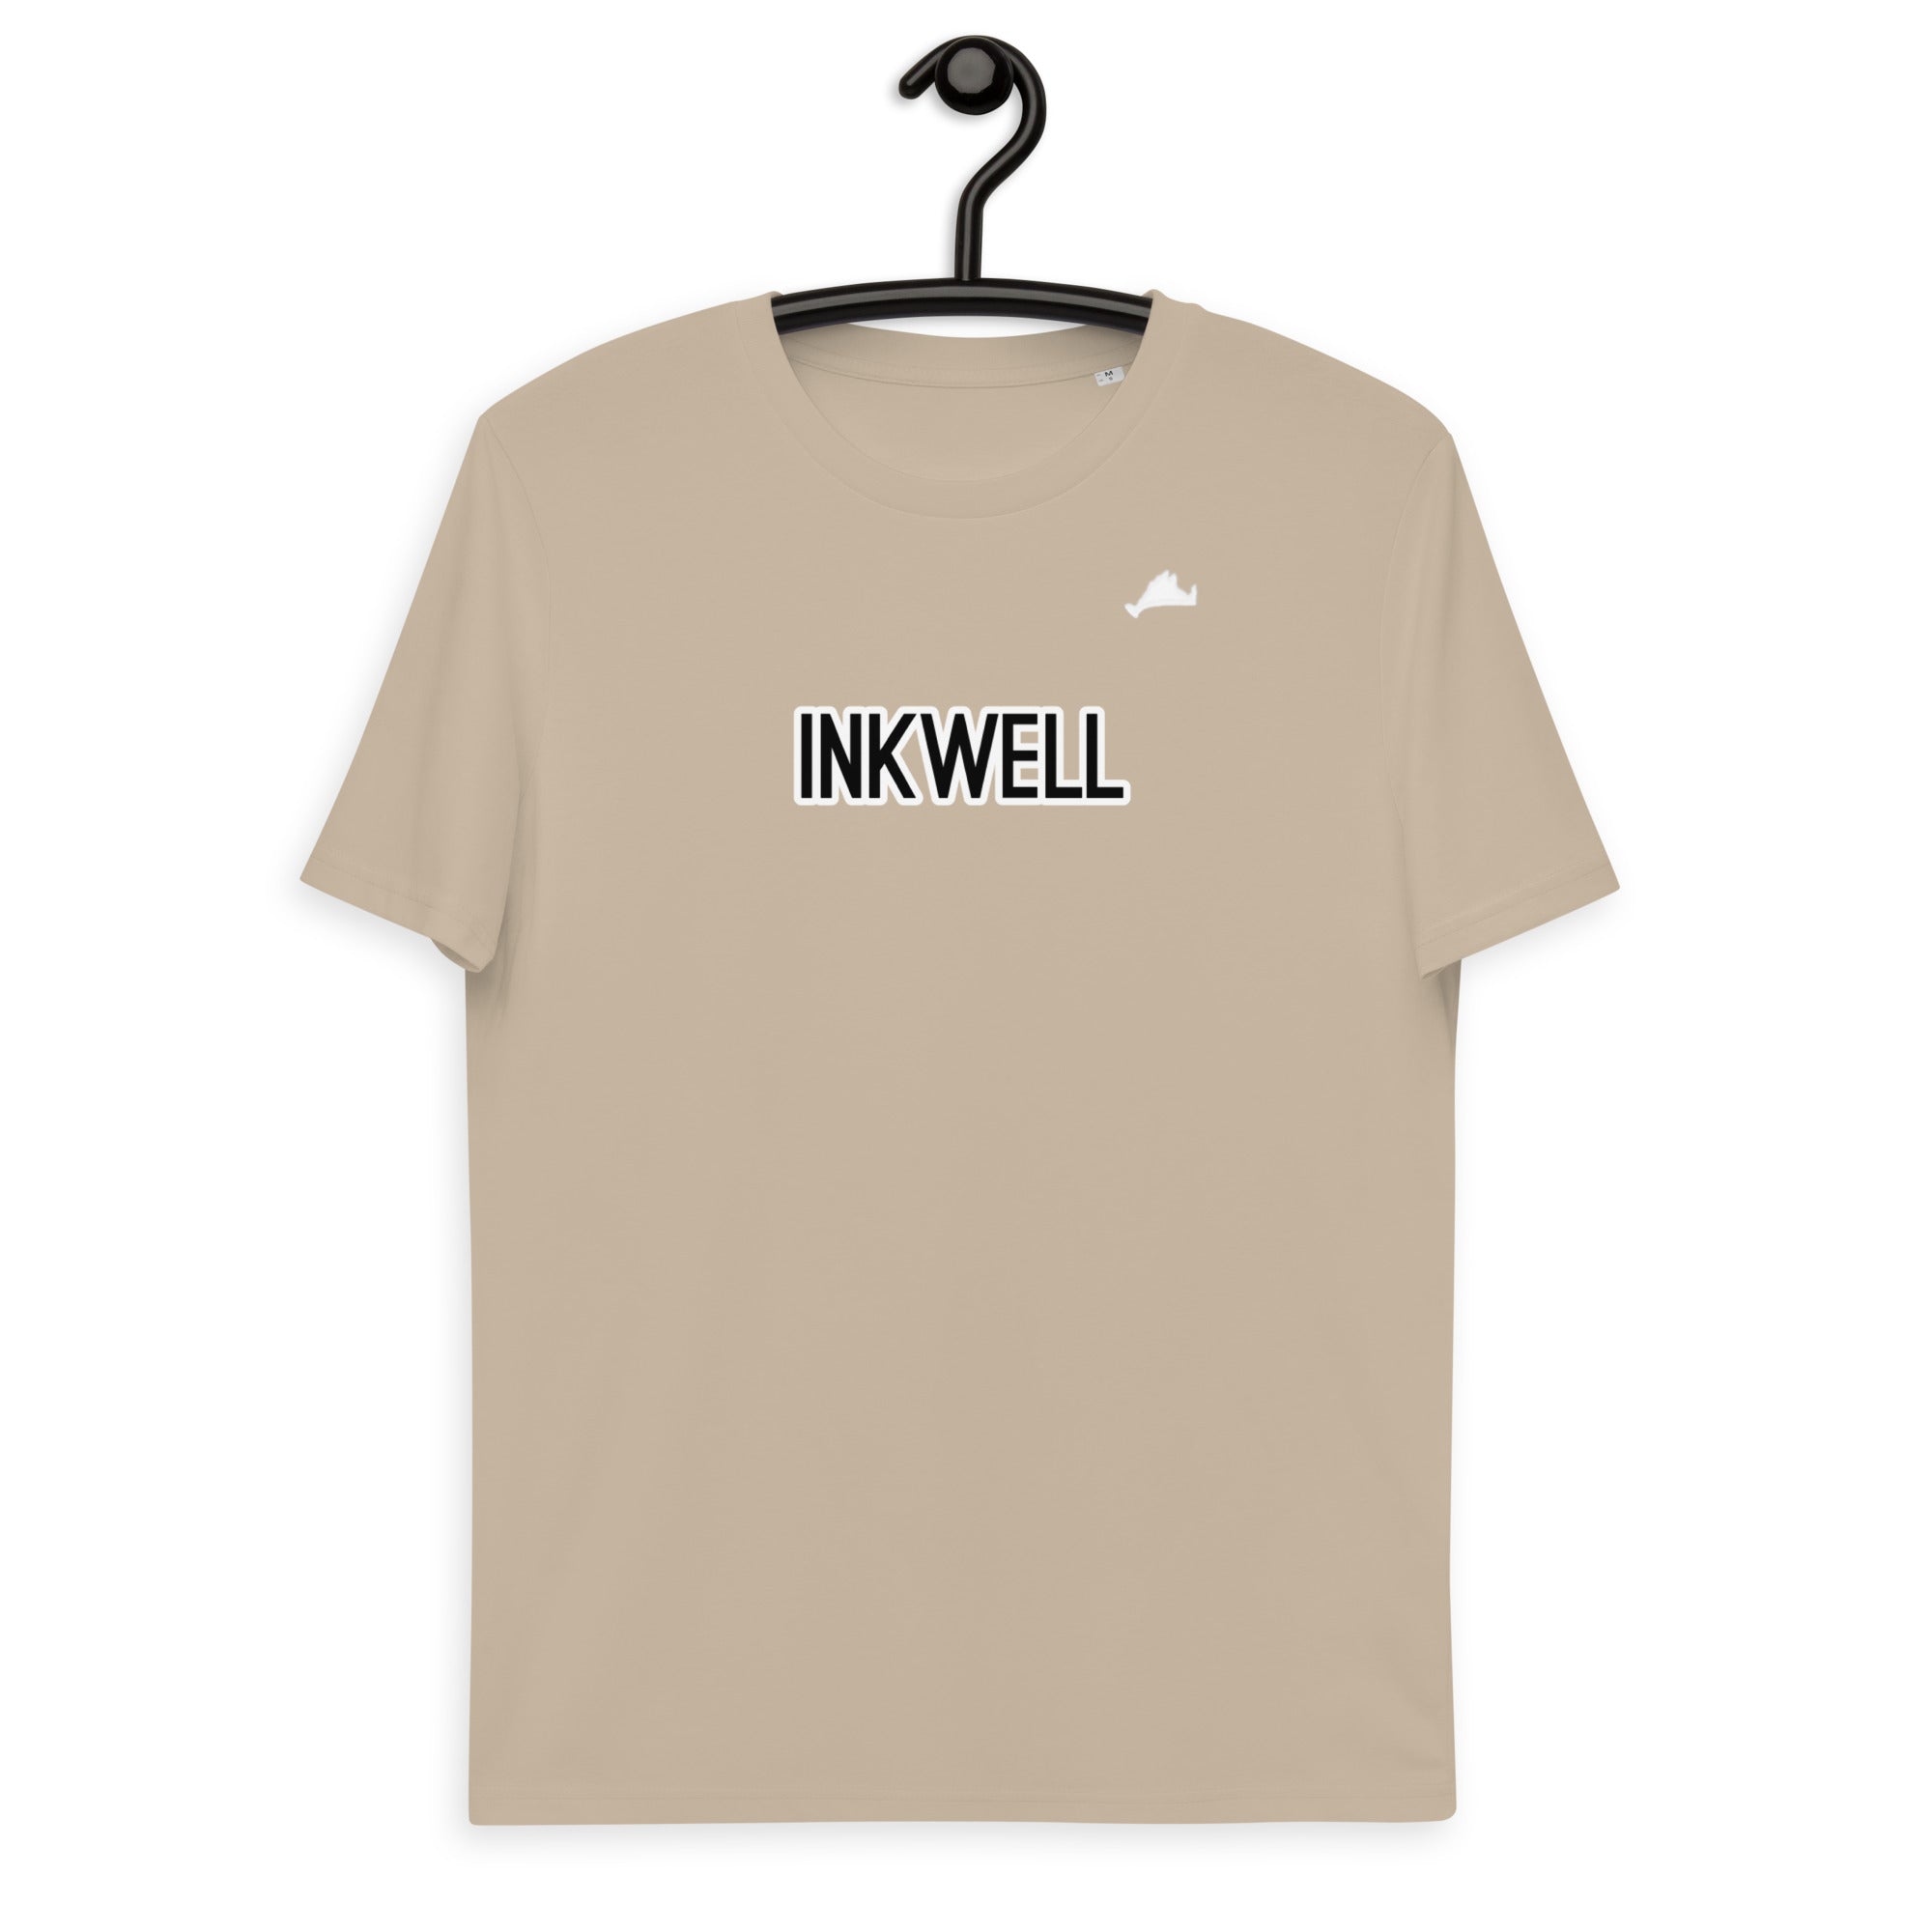 Inkwell Unisex Organic Cotton Tee Shirt